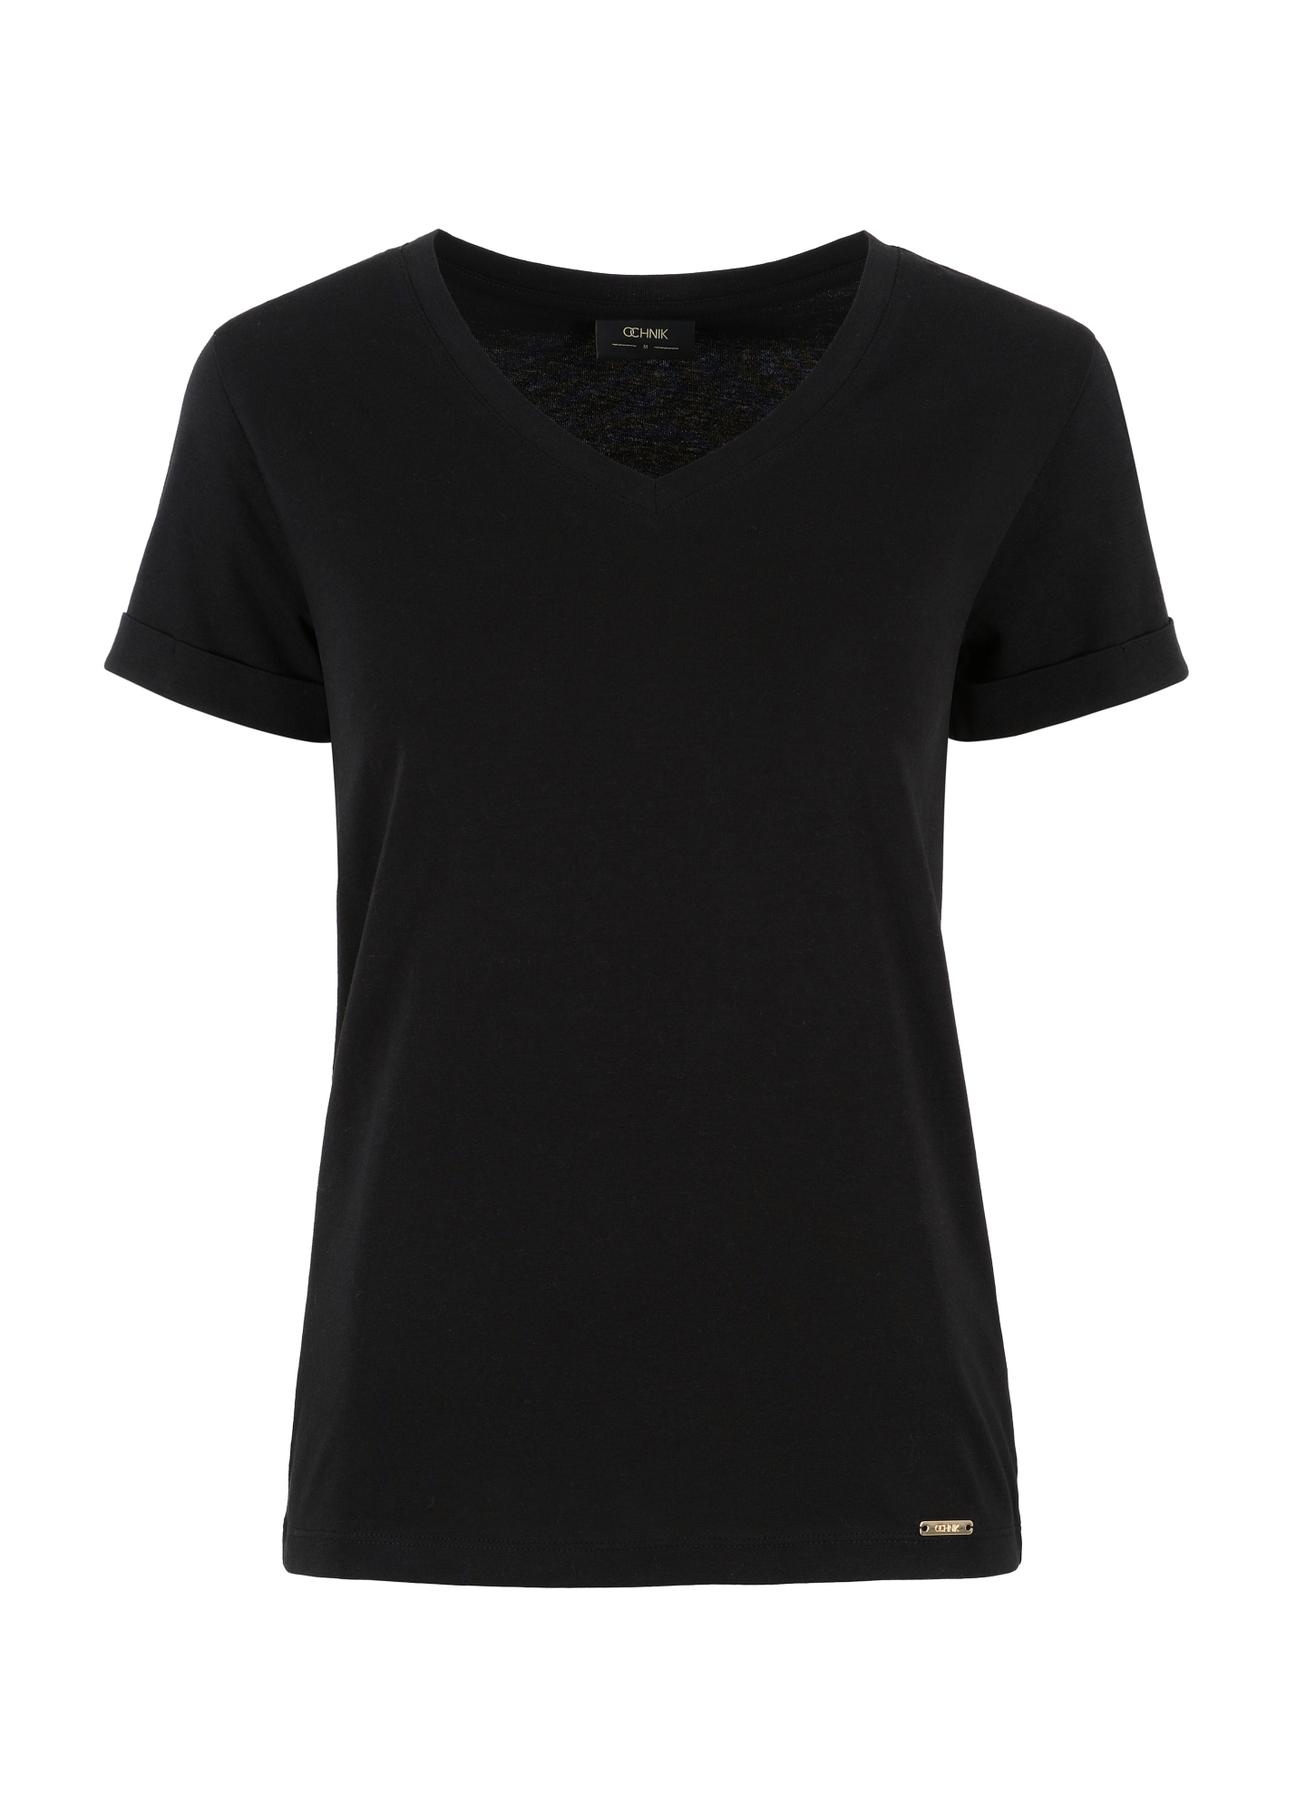 Czarny T-shirt damski w serek TSHDT-0118-99(W24)